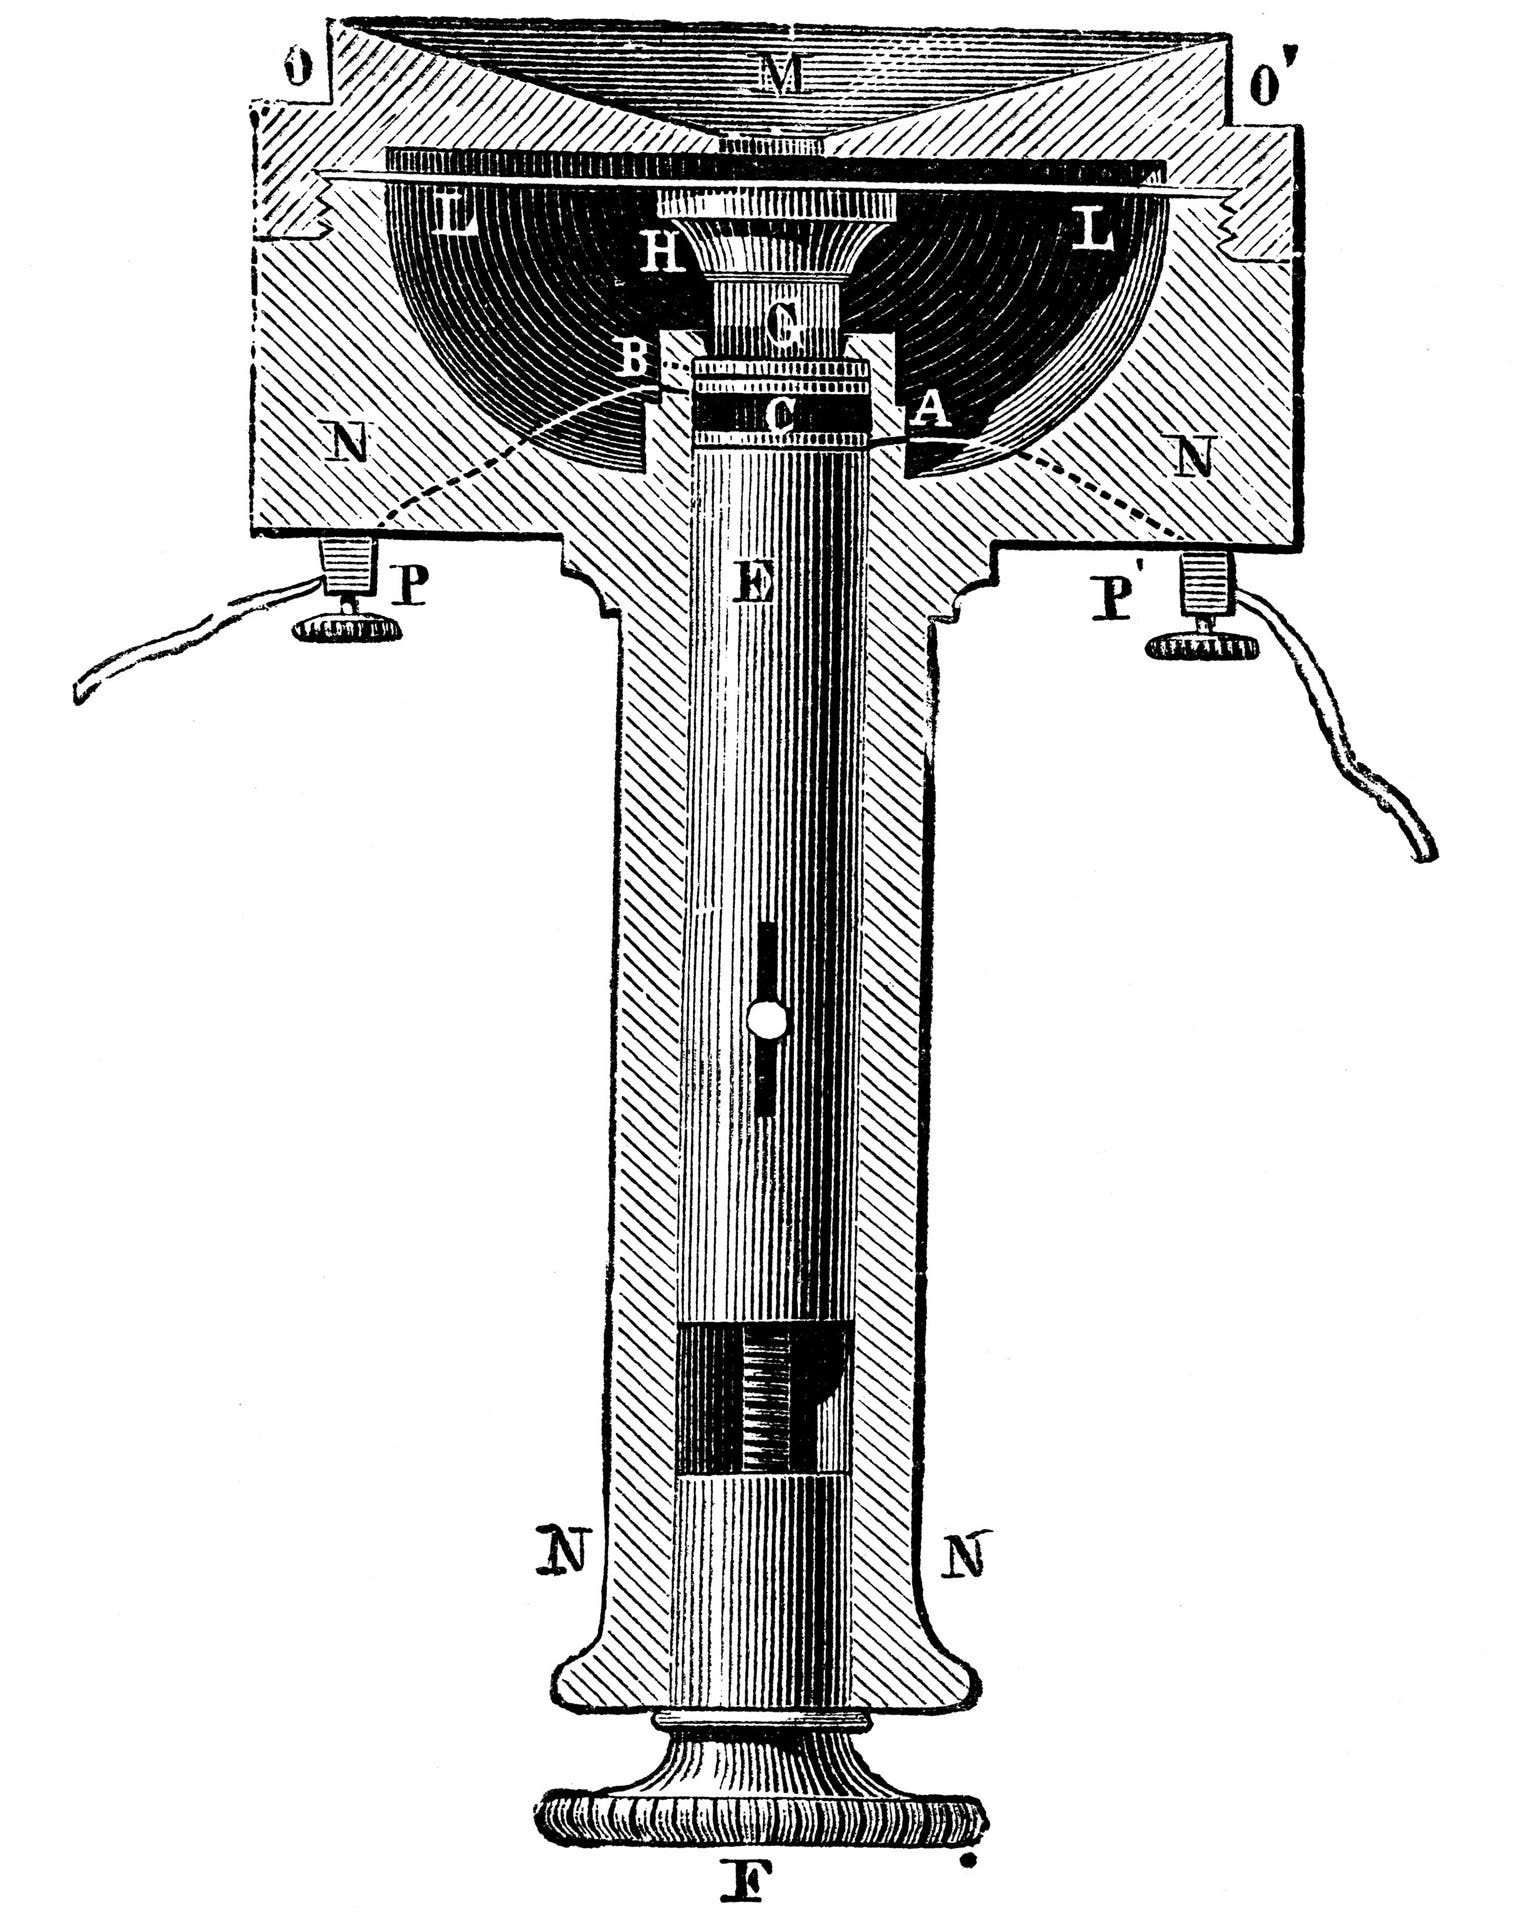 Edison's Lamp-black Carbon Telephone Transmitter